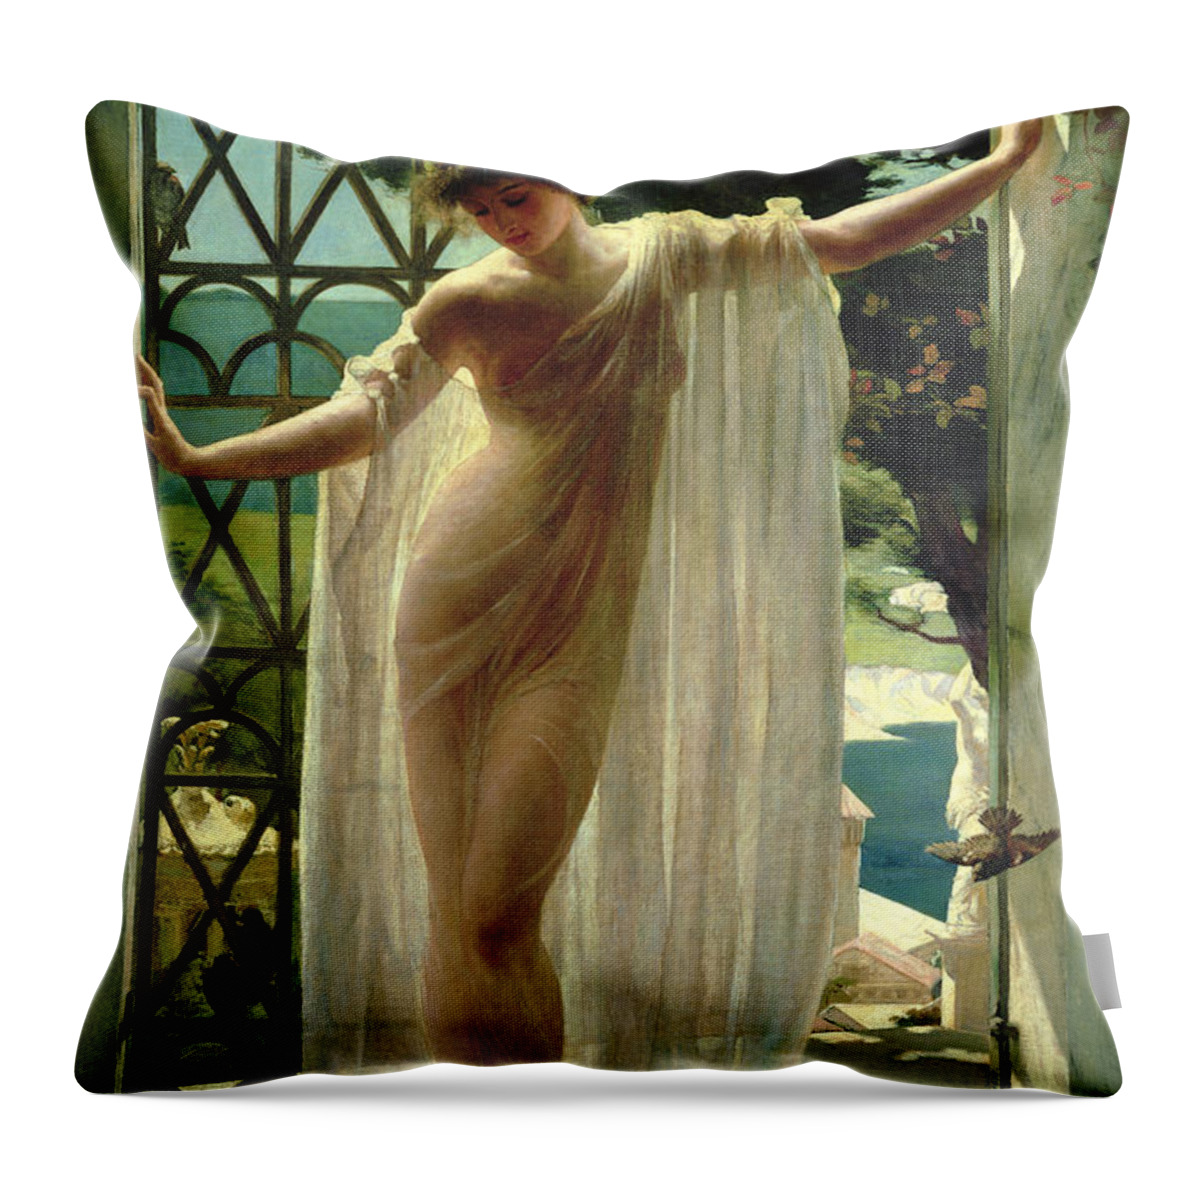 Lesbia Throw Pillow featuring the painting Lesbia by John Reinhard Weguelin